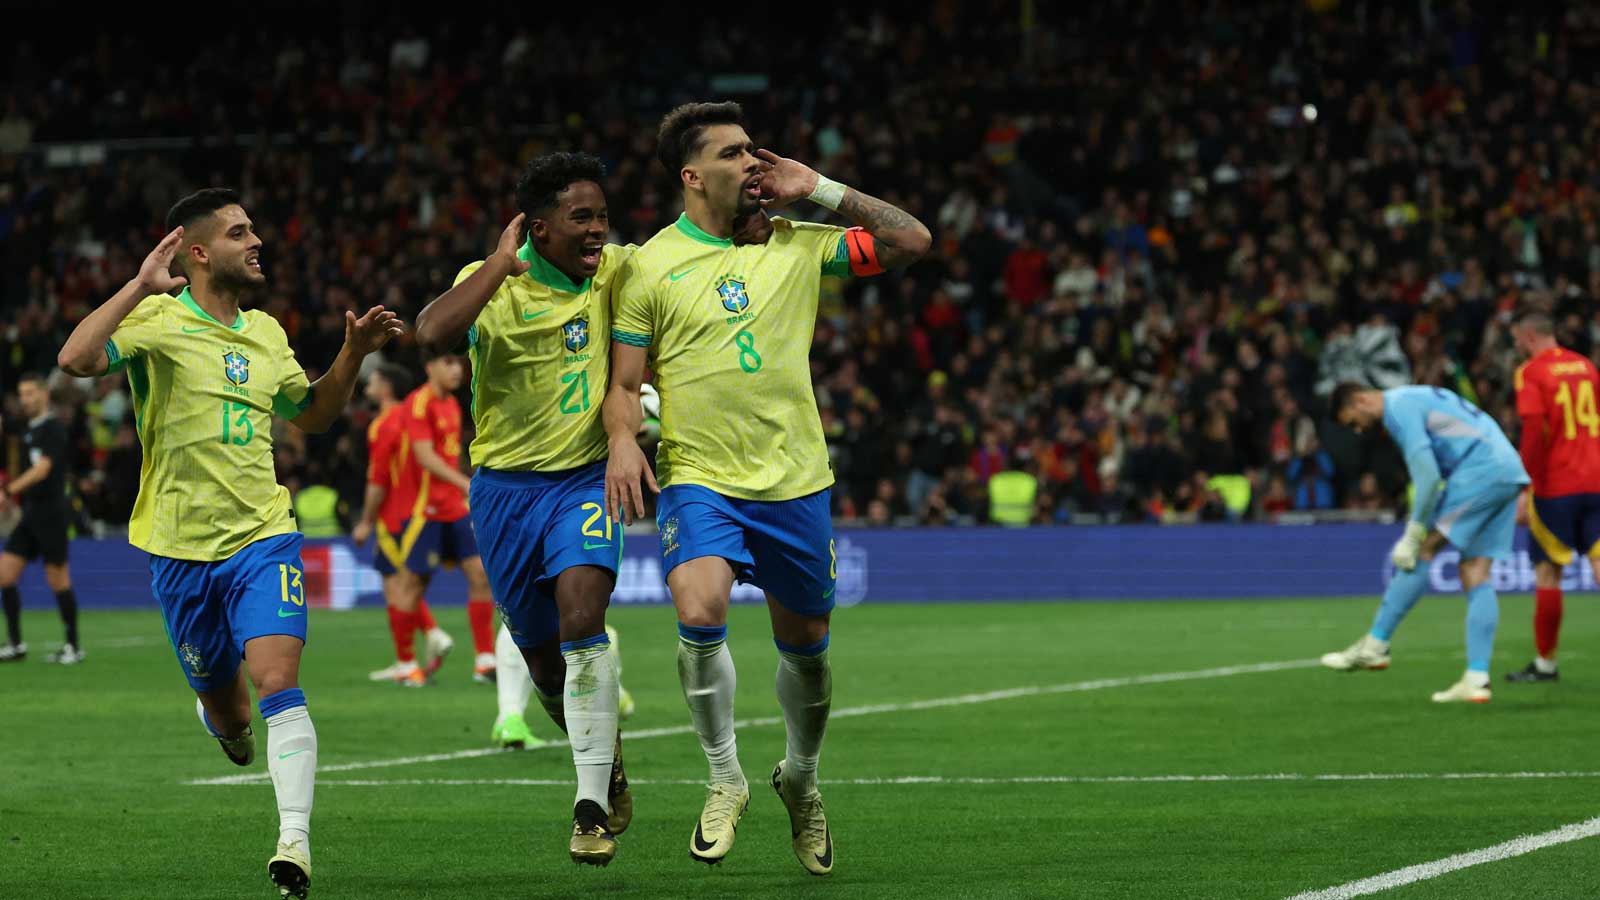 Lucas Paquetá celebrates scoring from Brazil against Spain